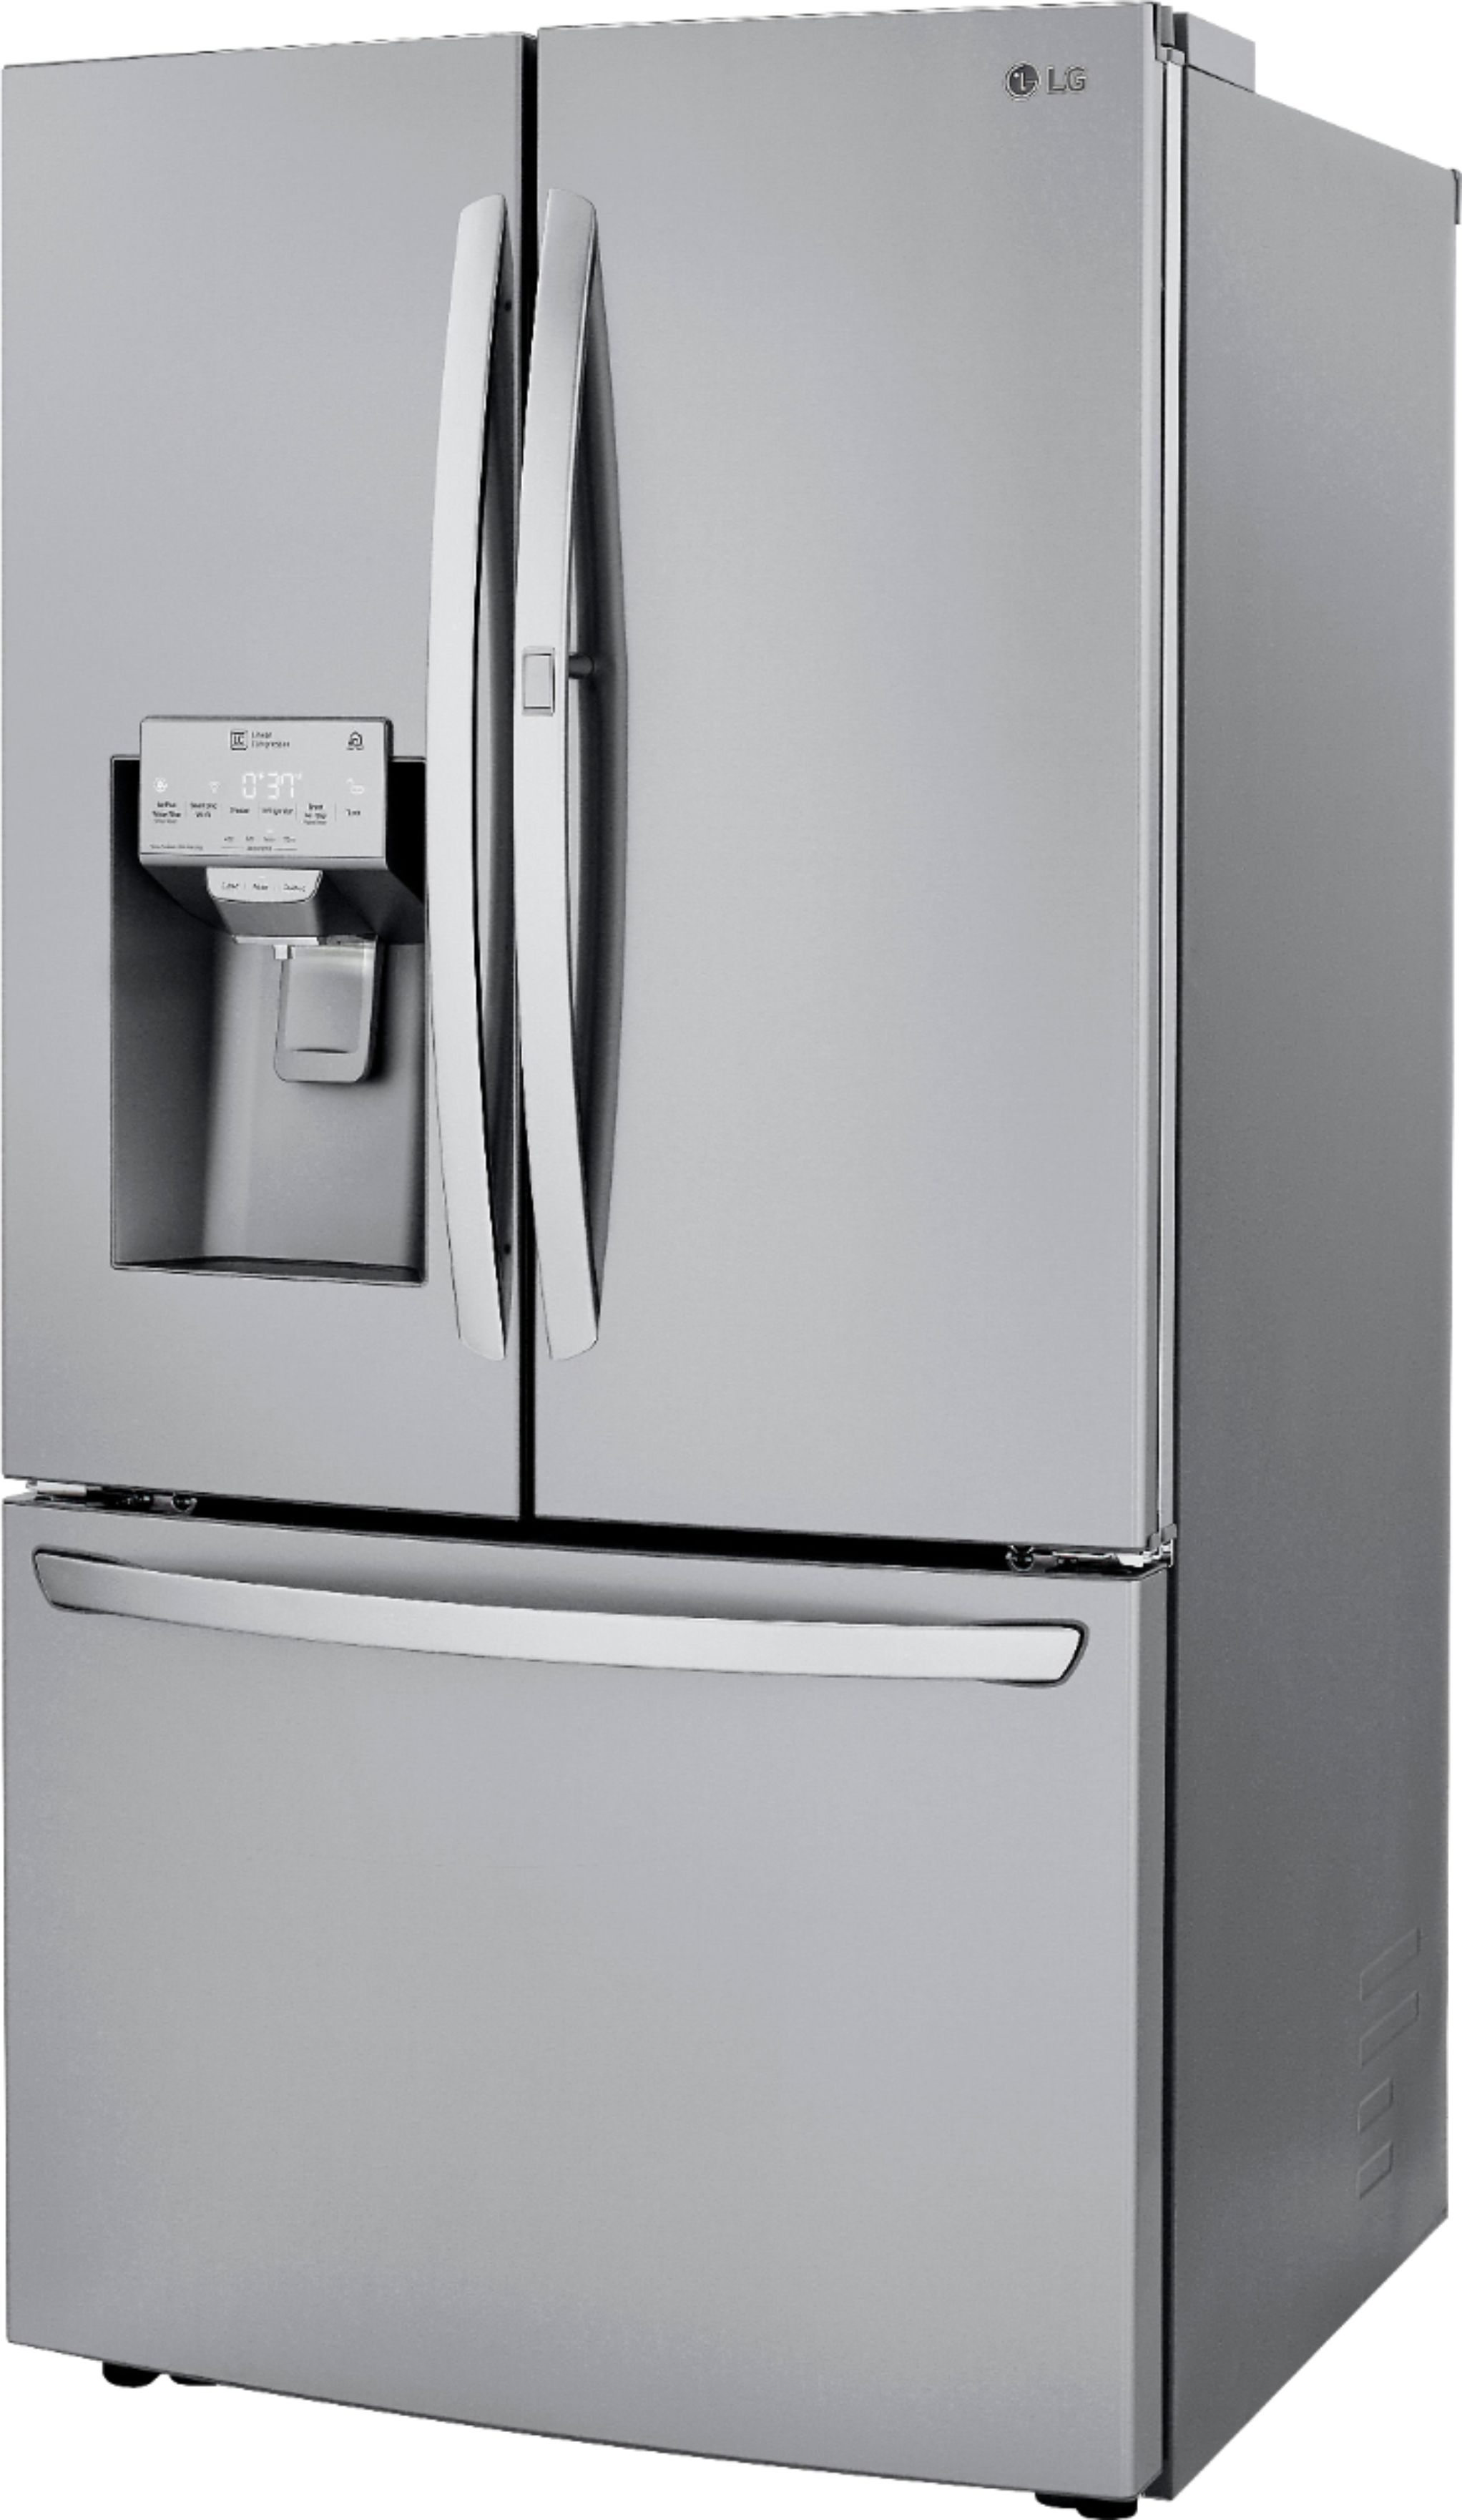 Left View: LG LRFDC2406S Refrigerator/Freezer